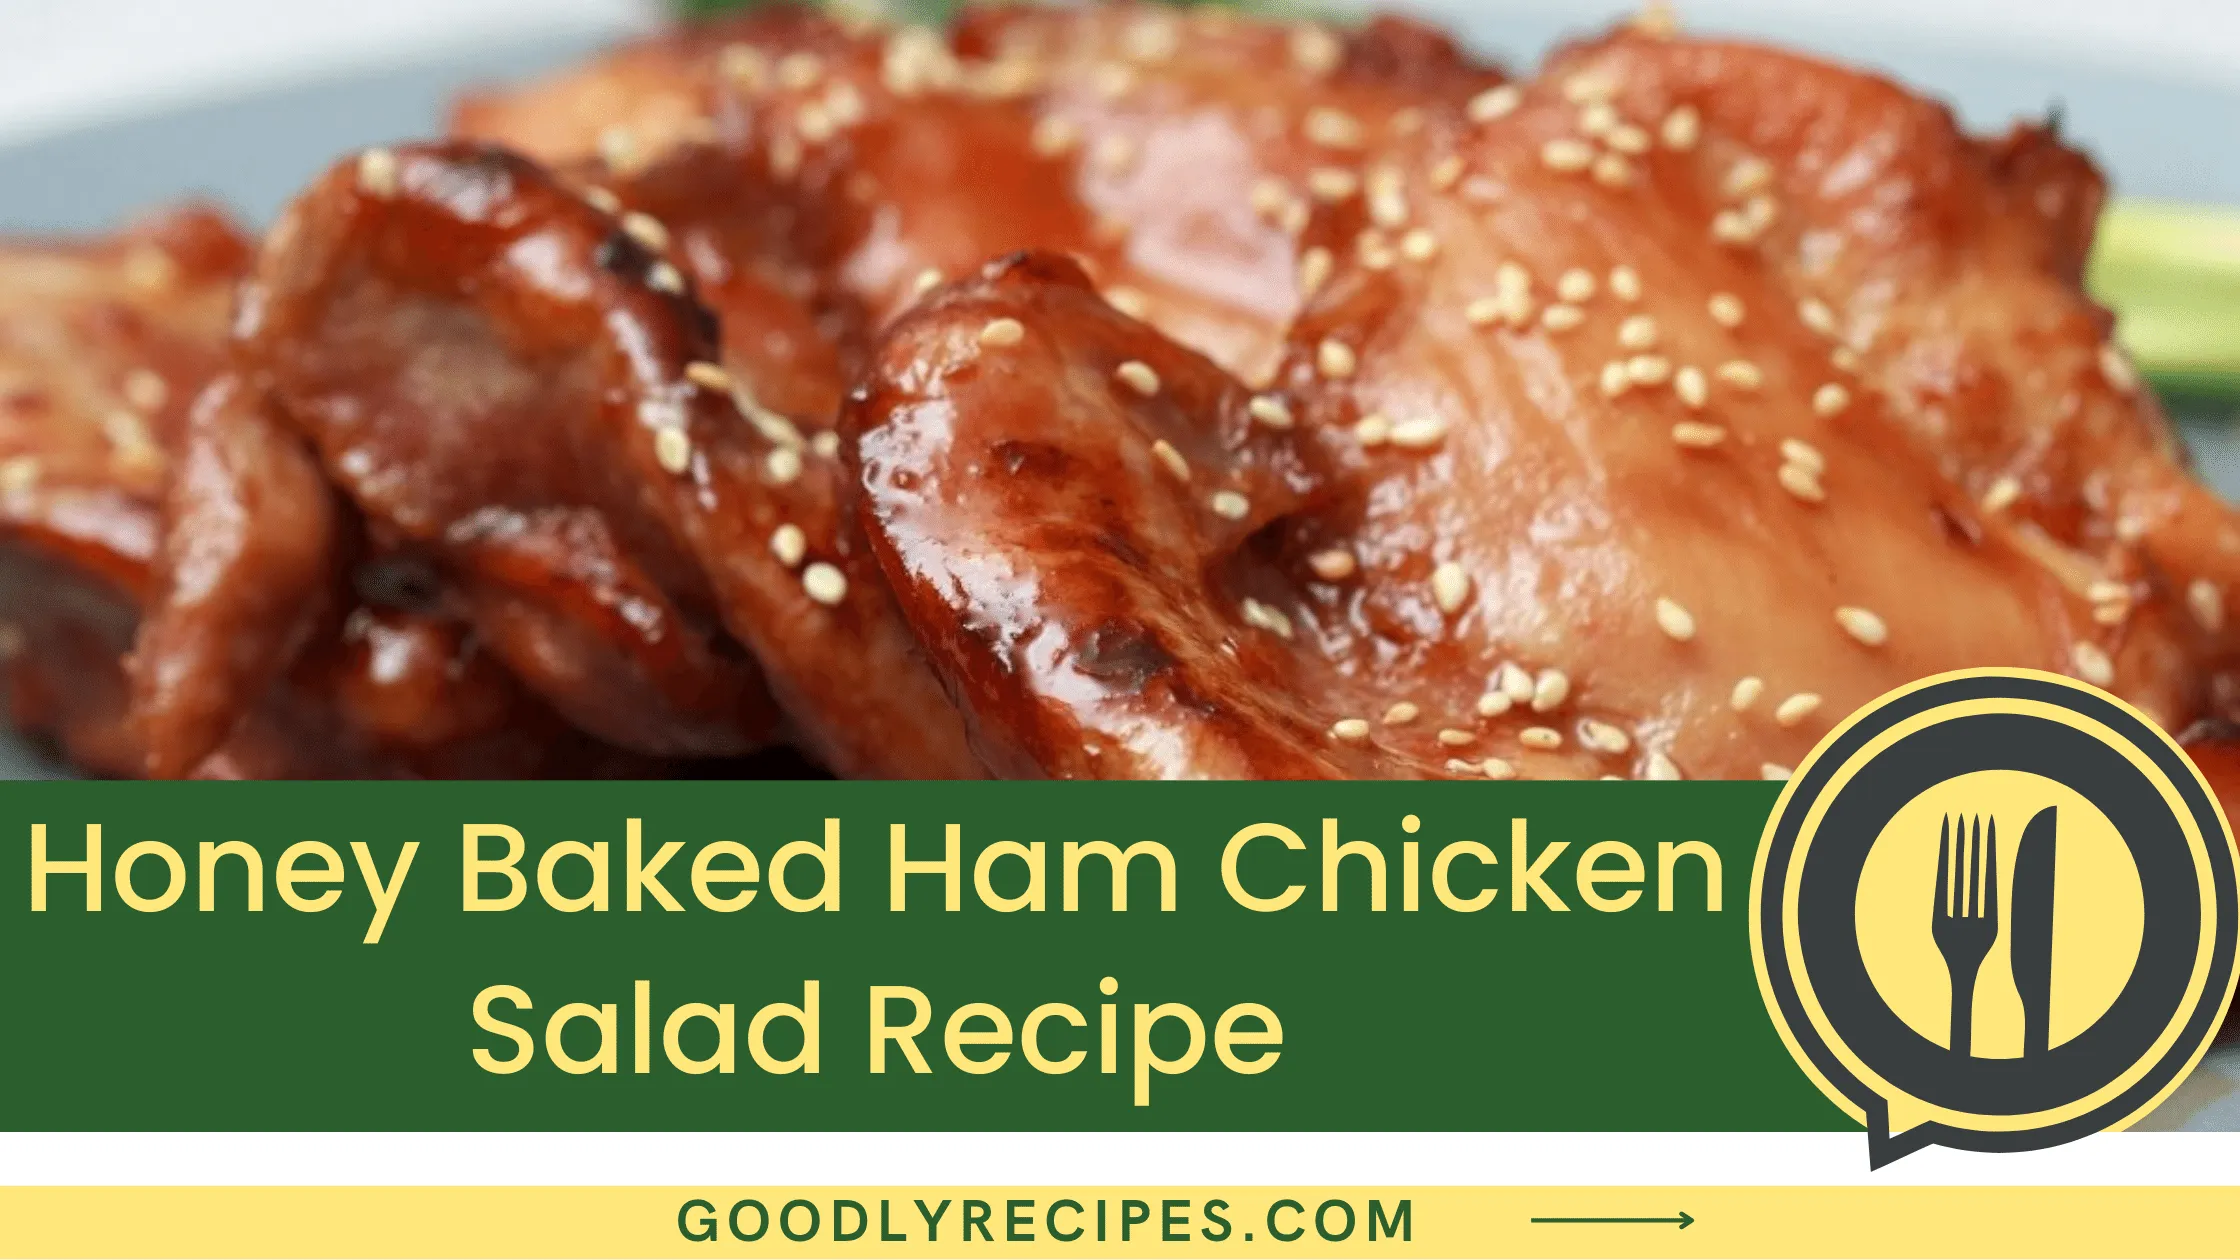 What is Honey Baked Ham Chicken Salad?